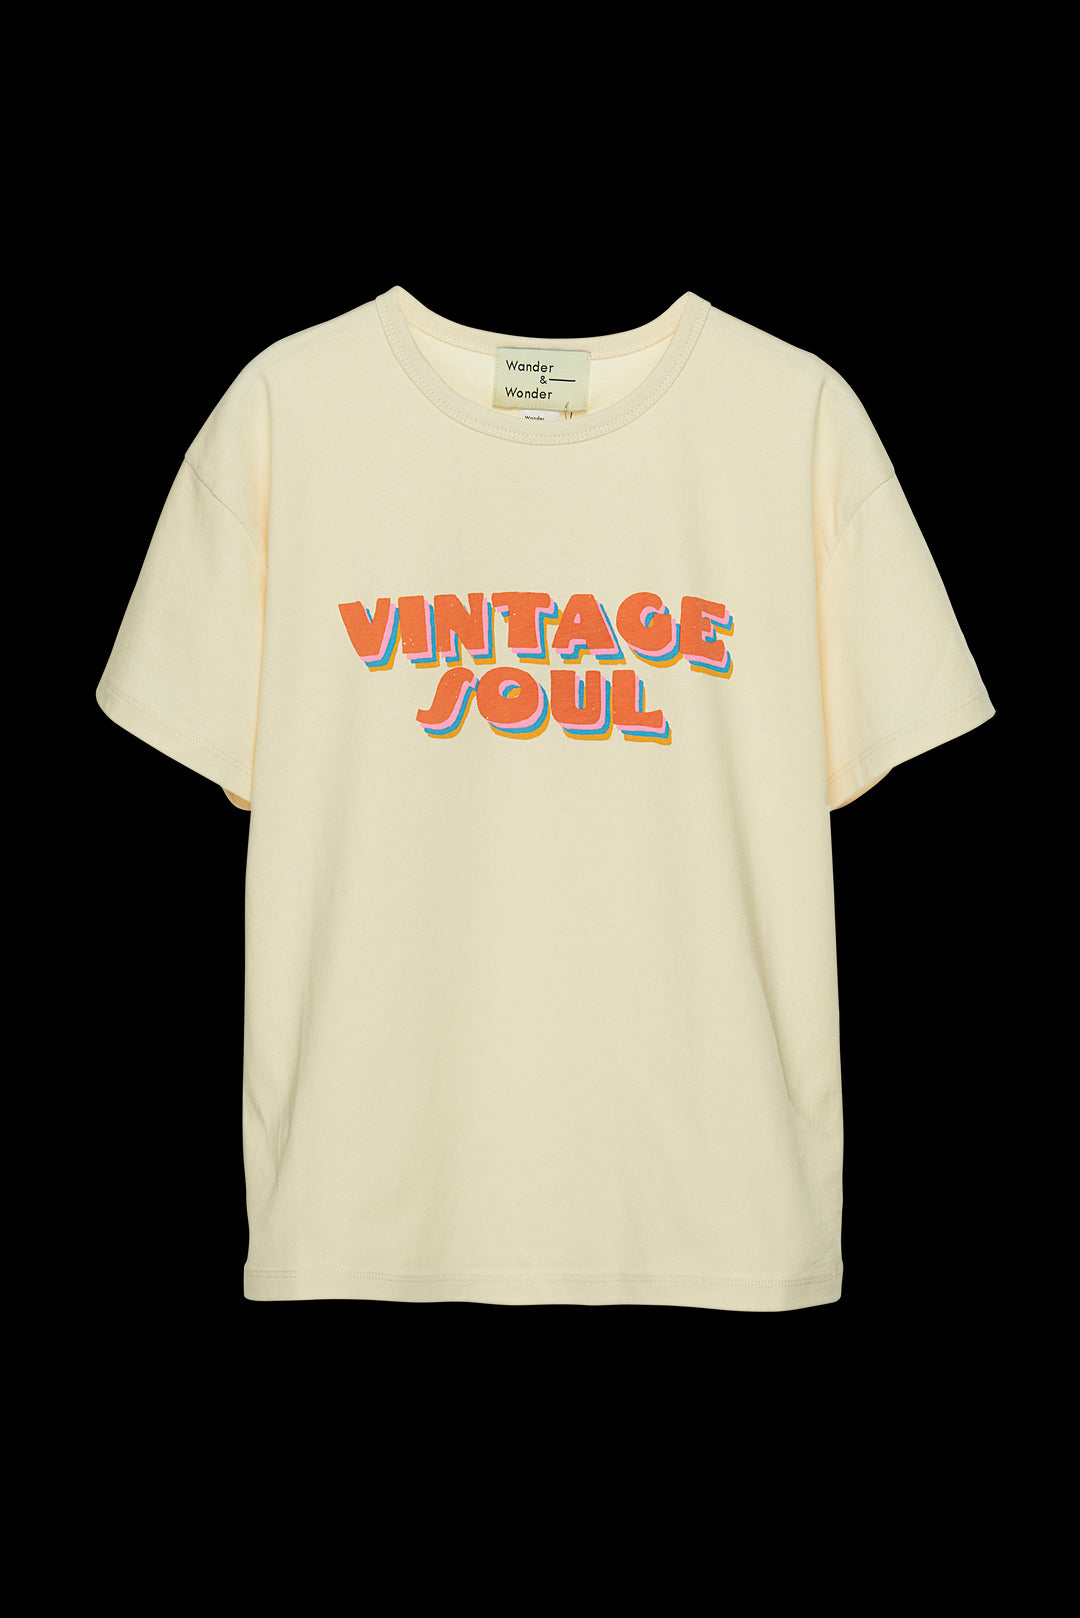 T-shirt Vintage Soul Wheat